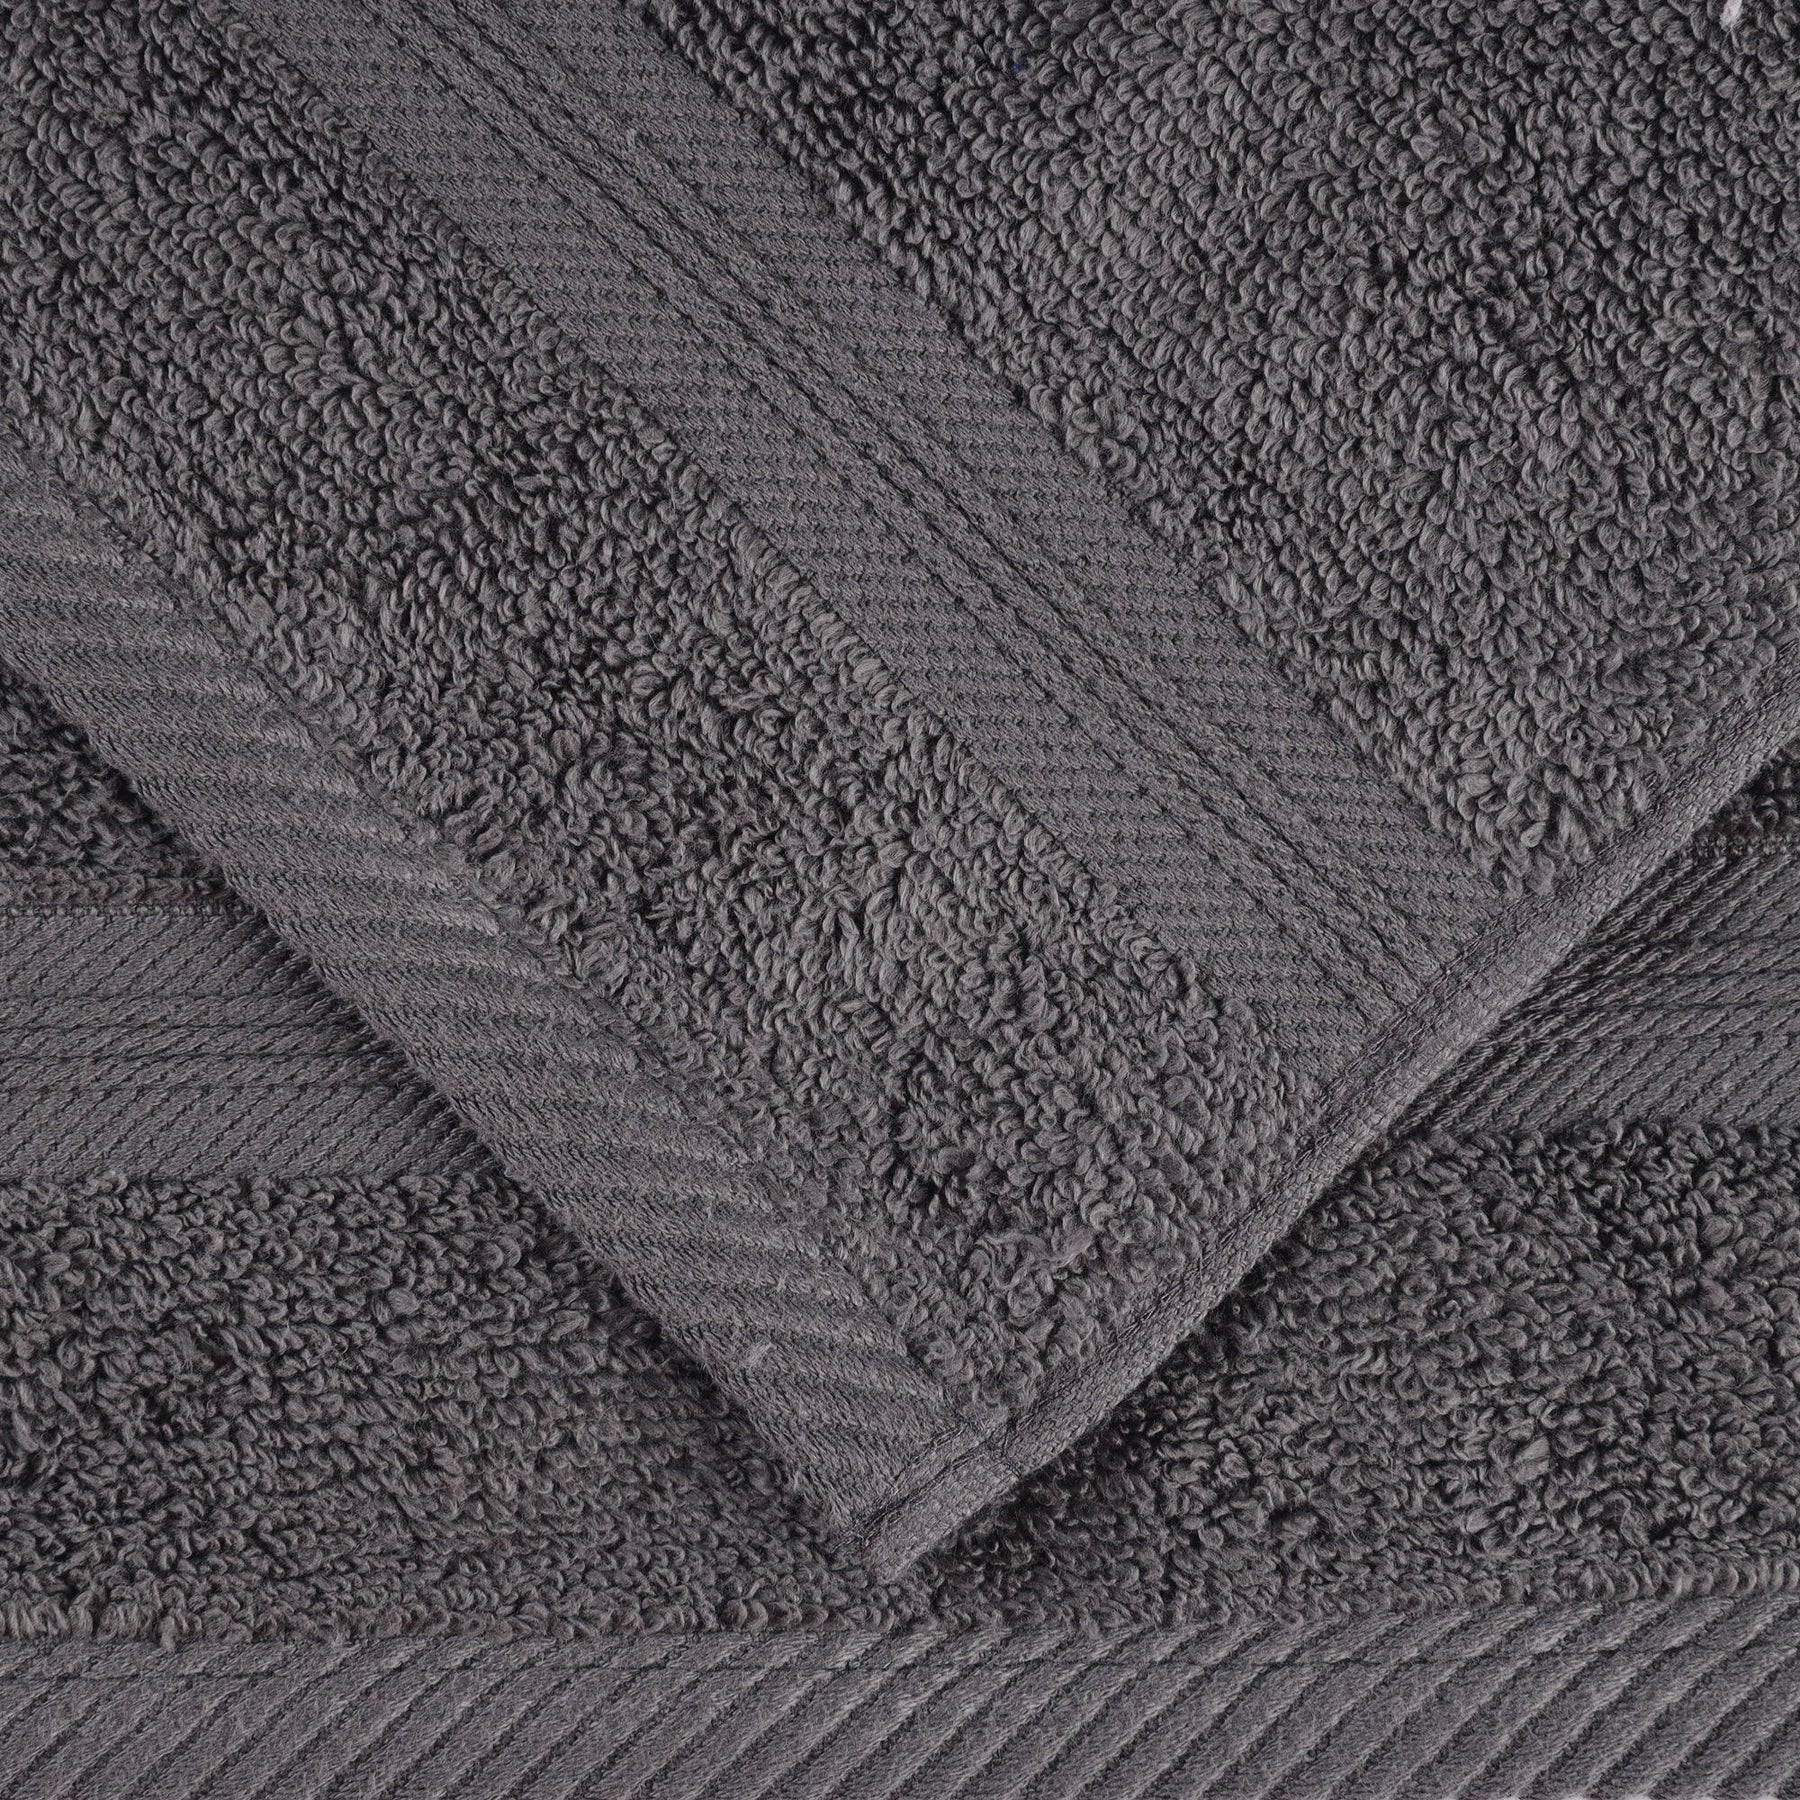  Superior Smart Dry Zero Twist Cotton 6-Piece Hand Towel Set - Grey